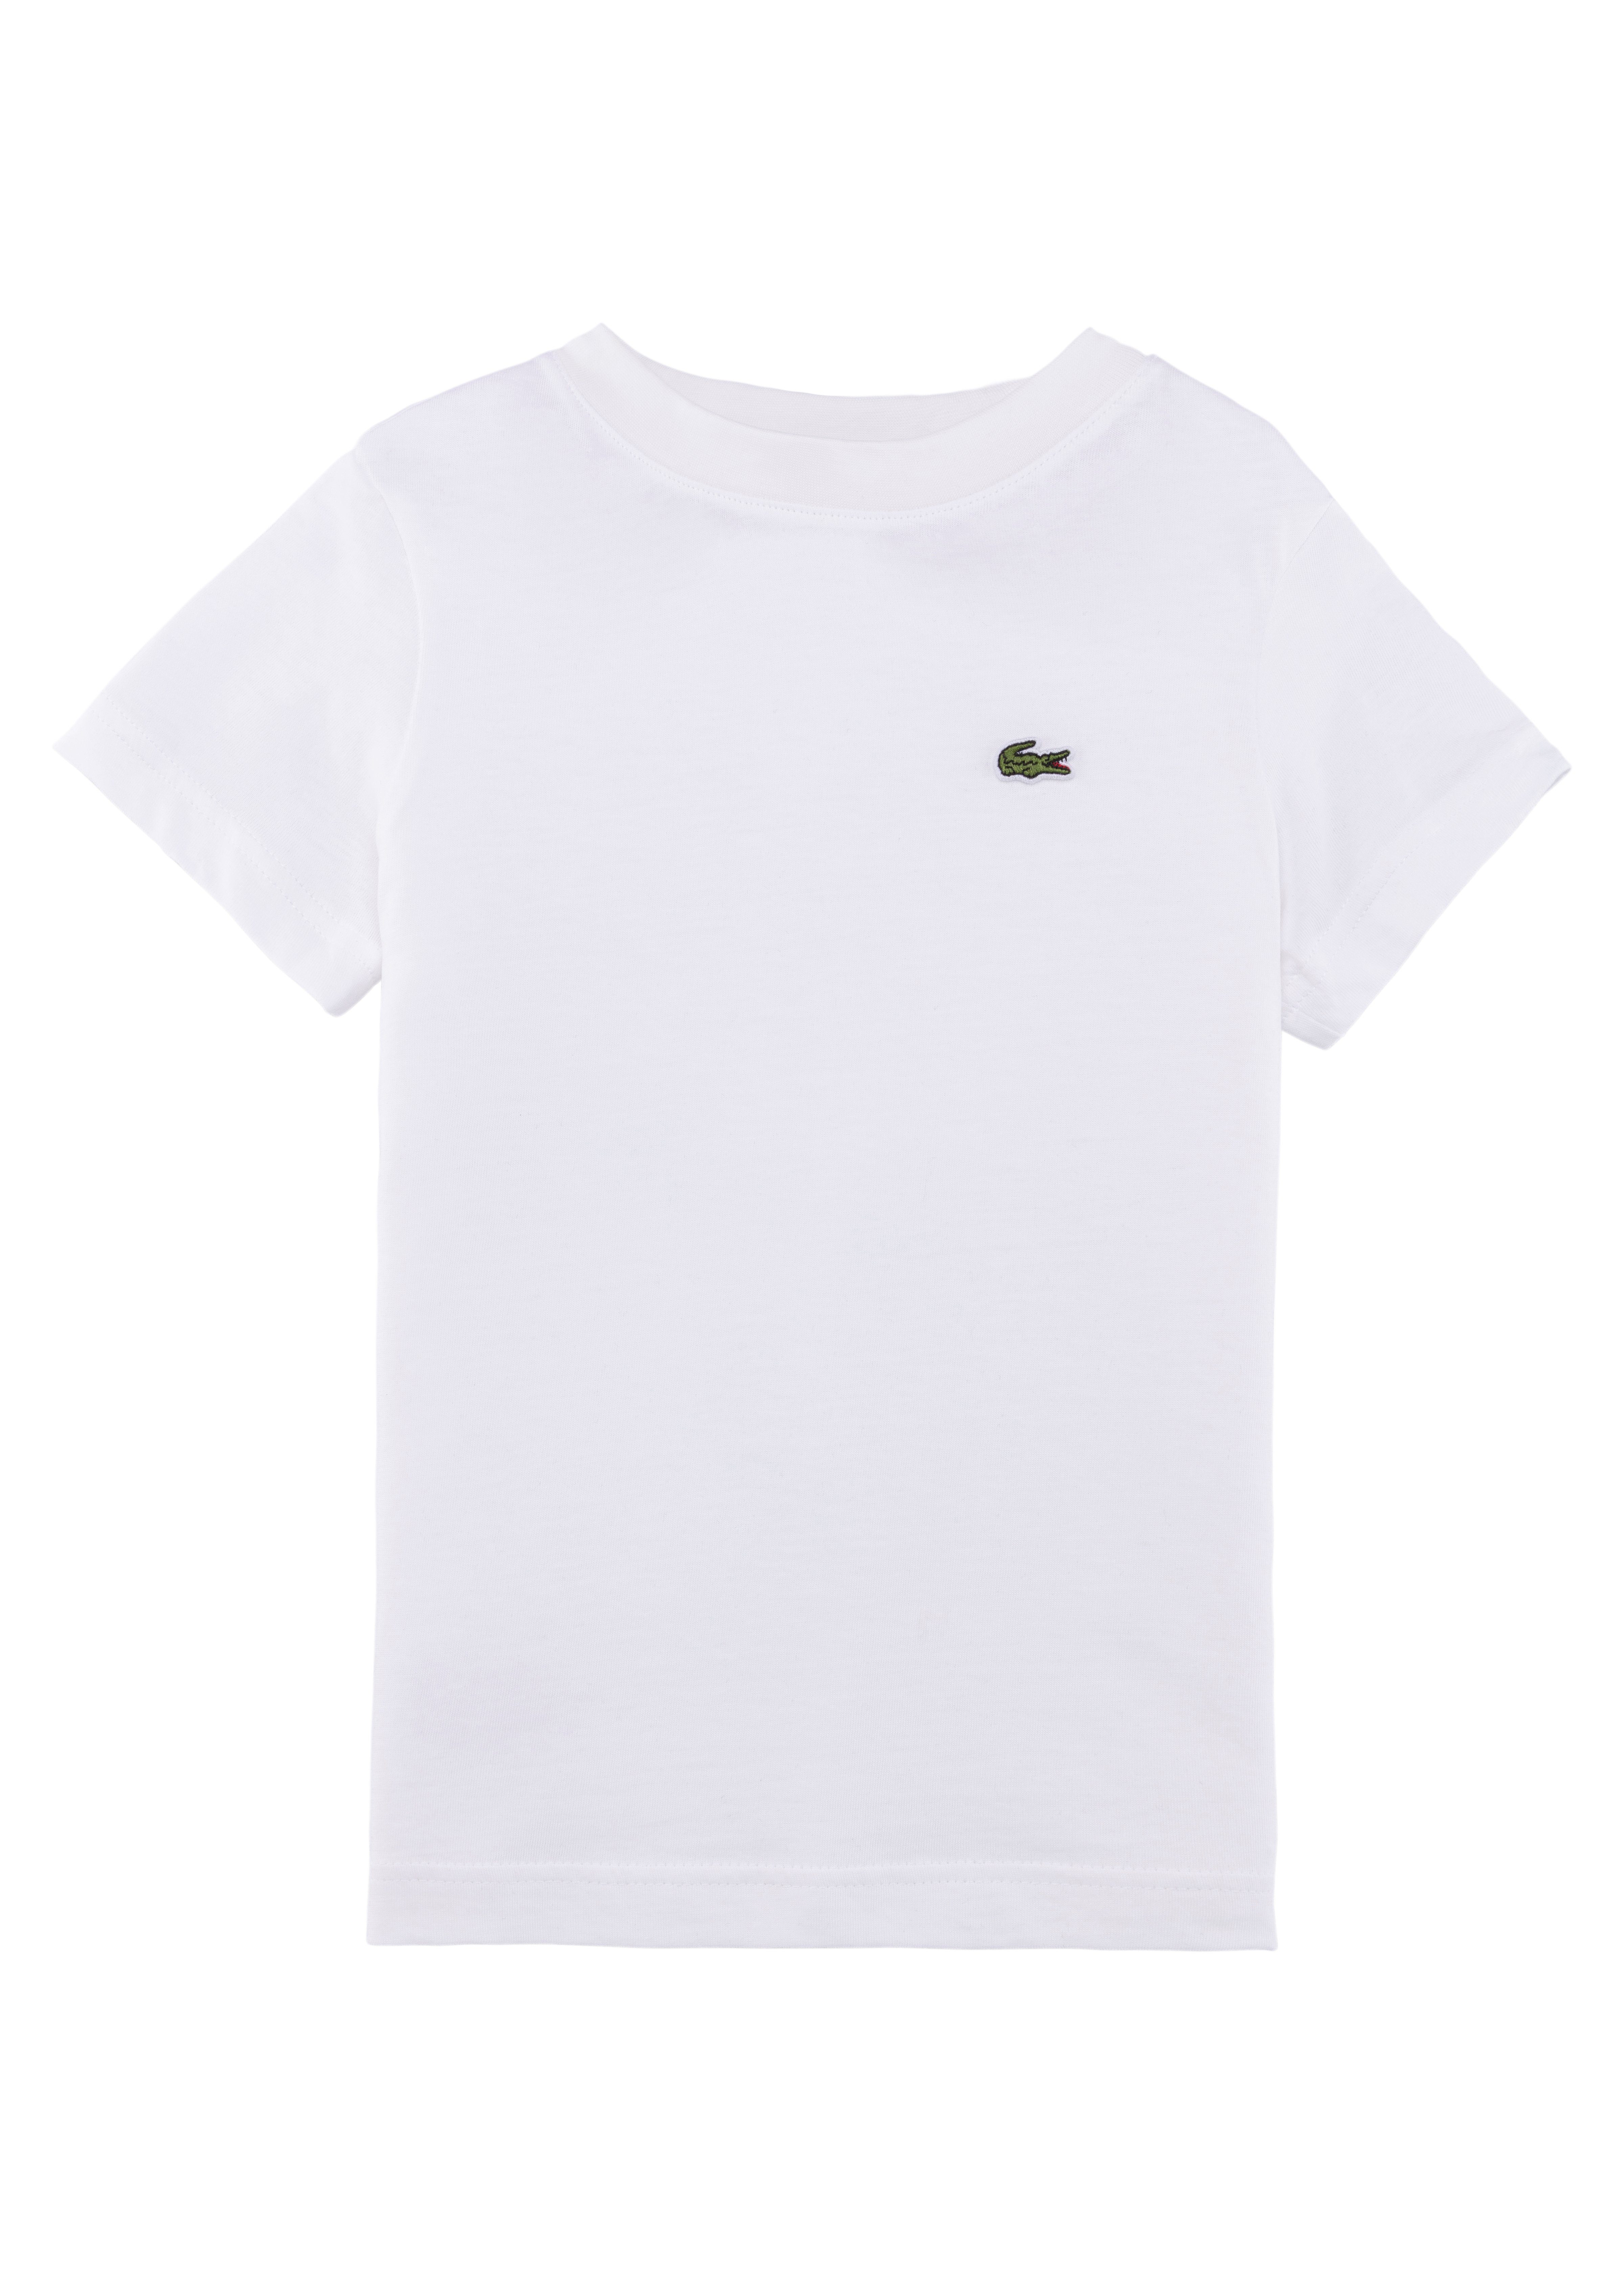 Lacoste auf T-Shirt mit Brusthöhe Lacoste-Krokodil WHITE